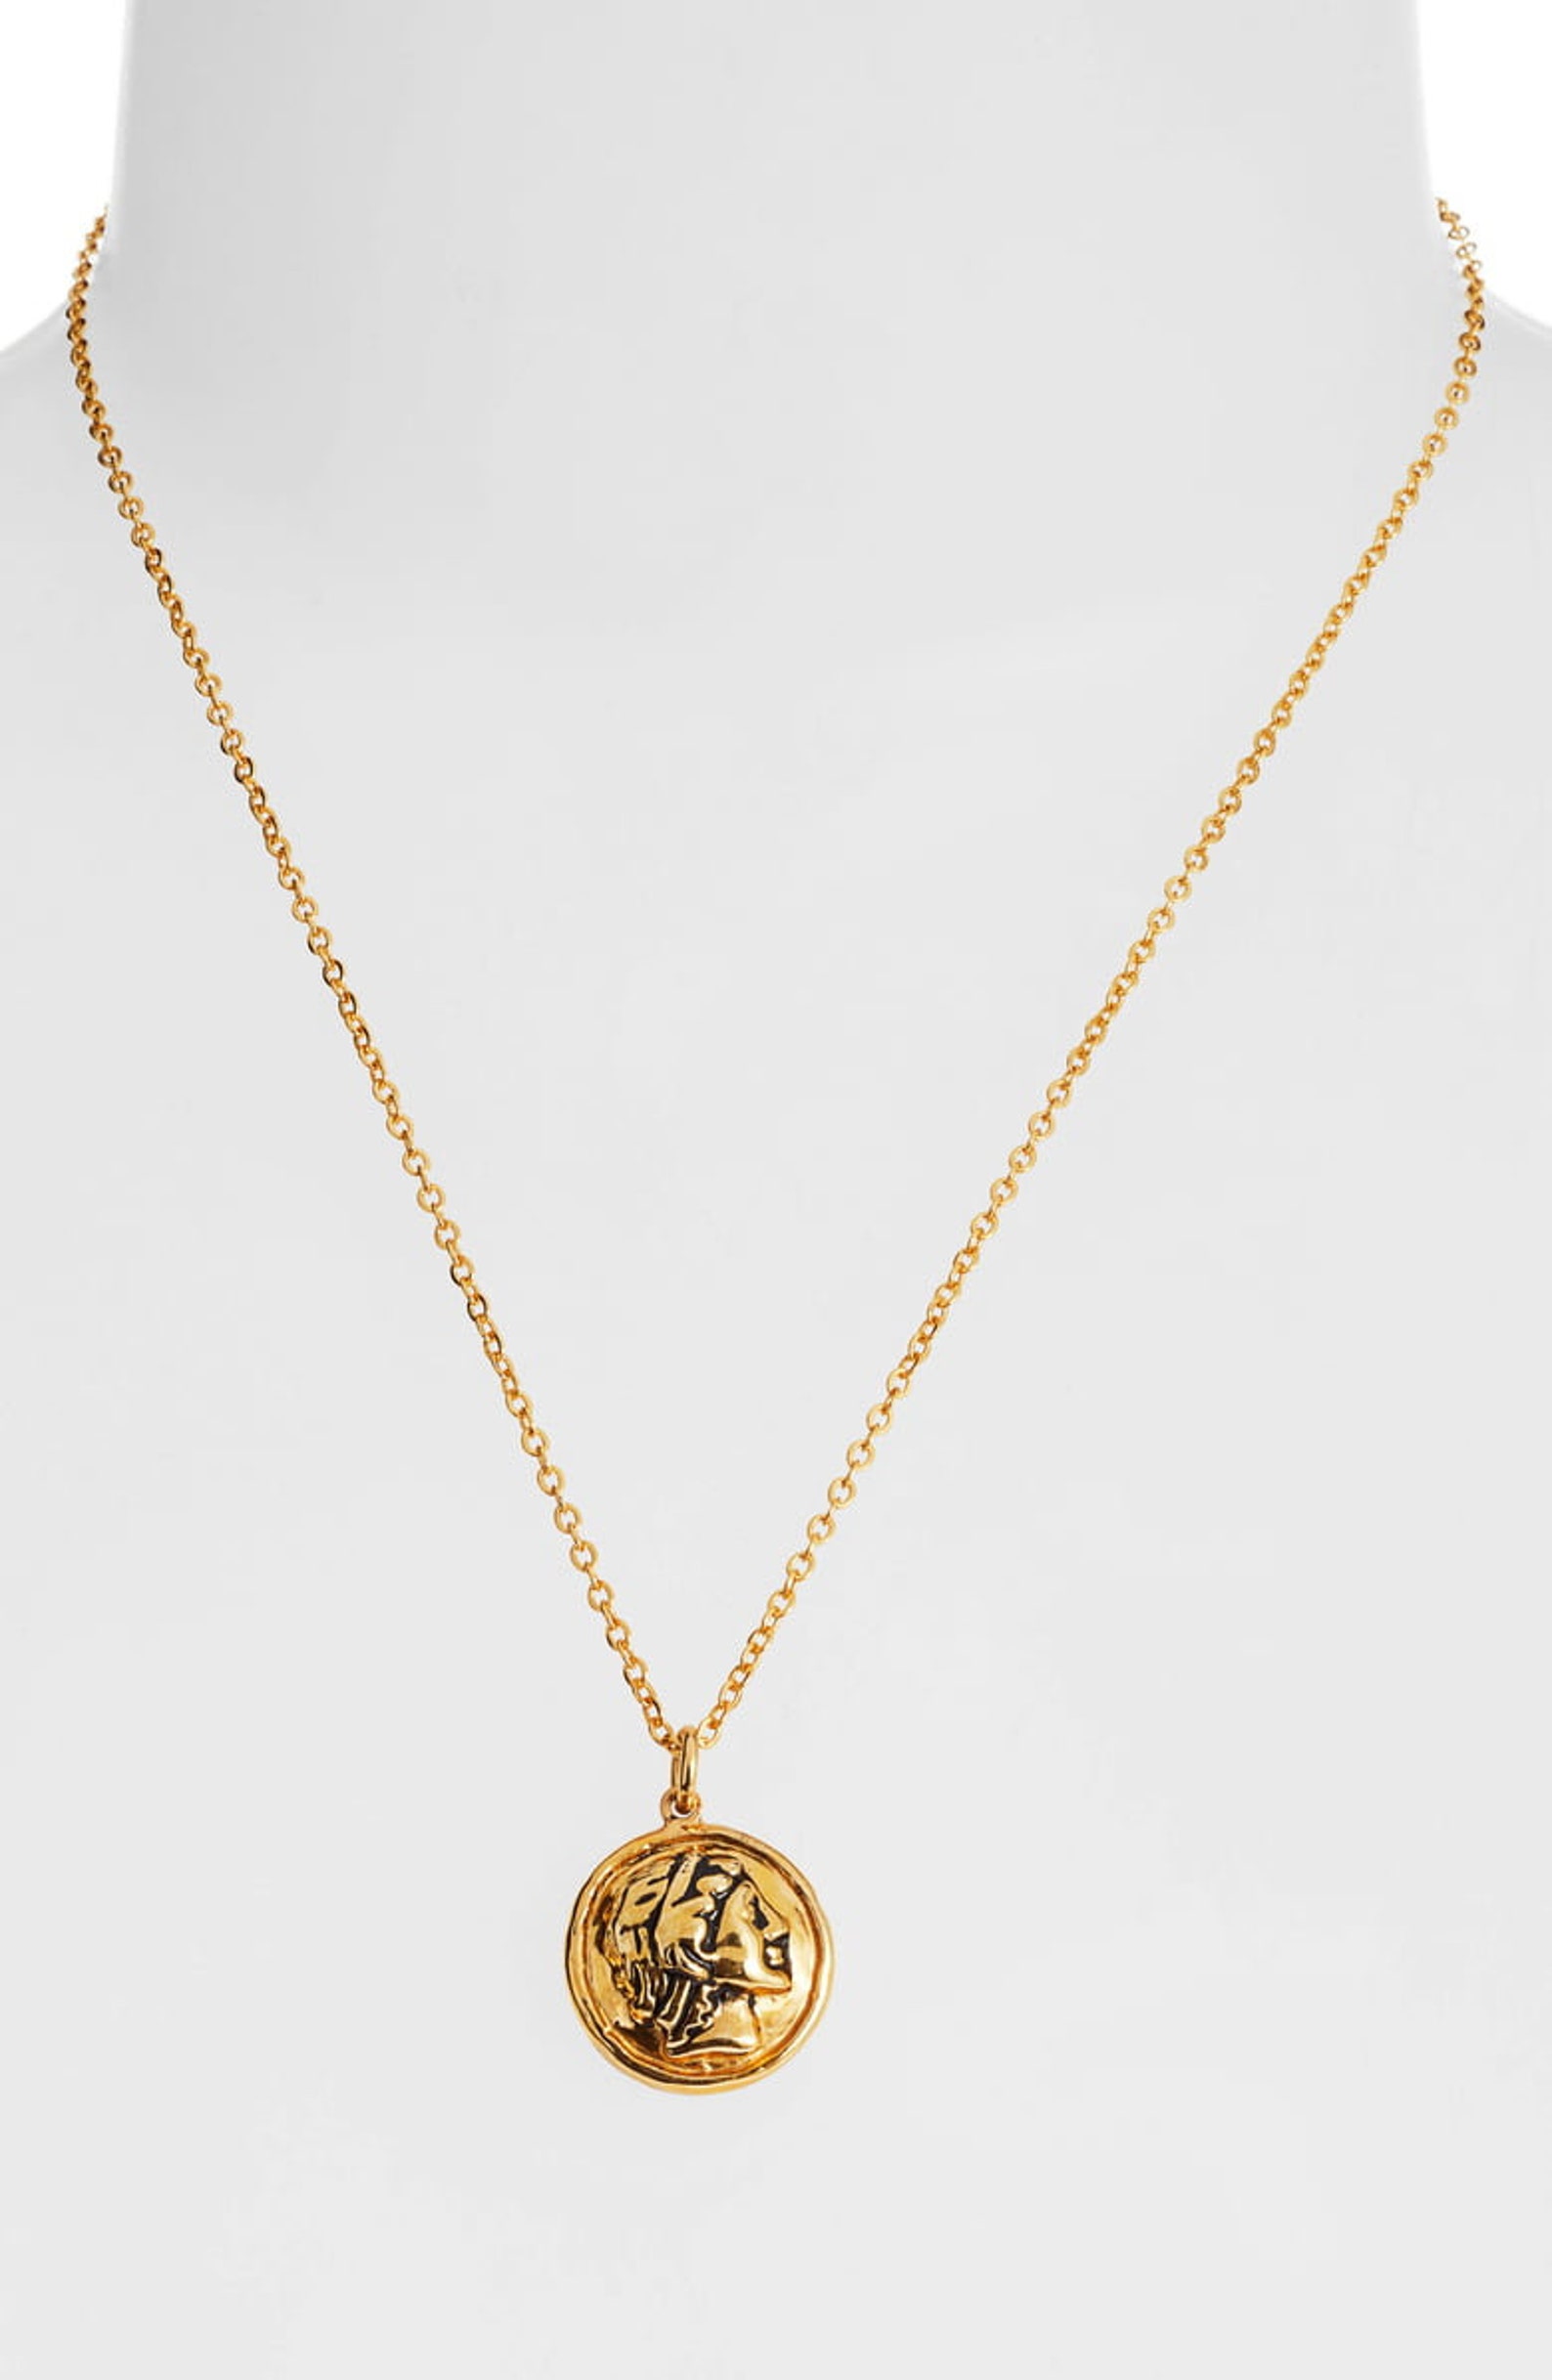 Julius Caesar Pendant Necklace for Women Statement Gold Roman | Etsy